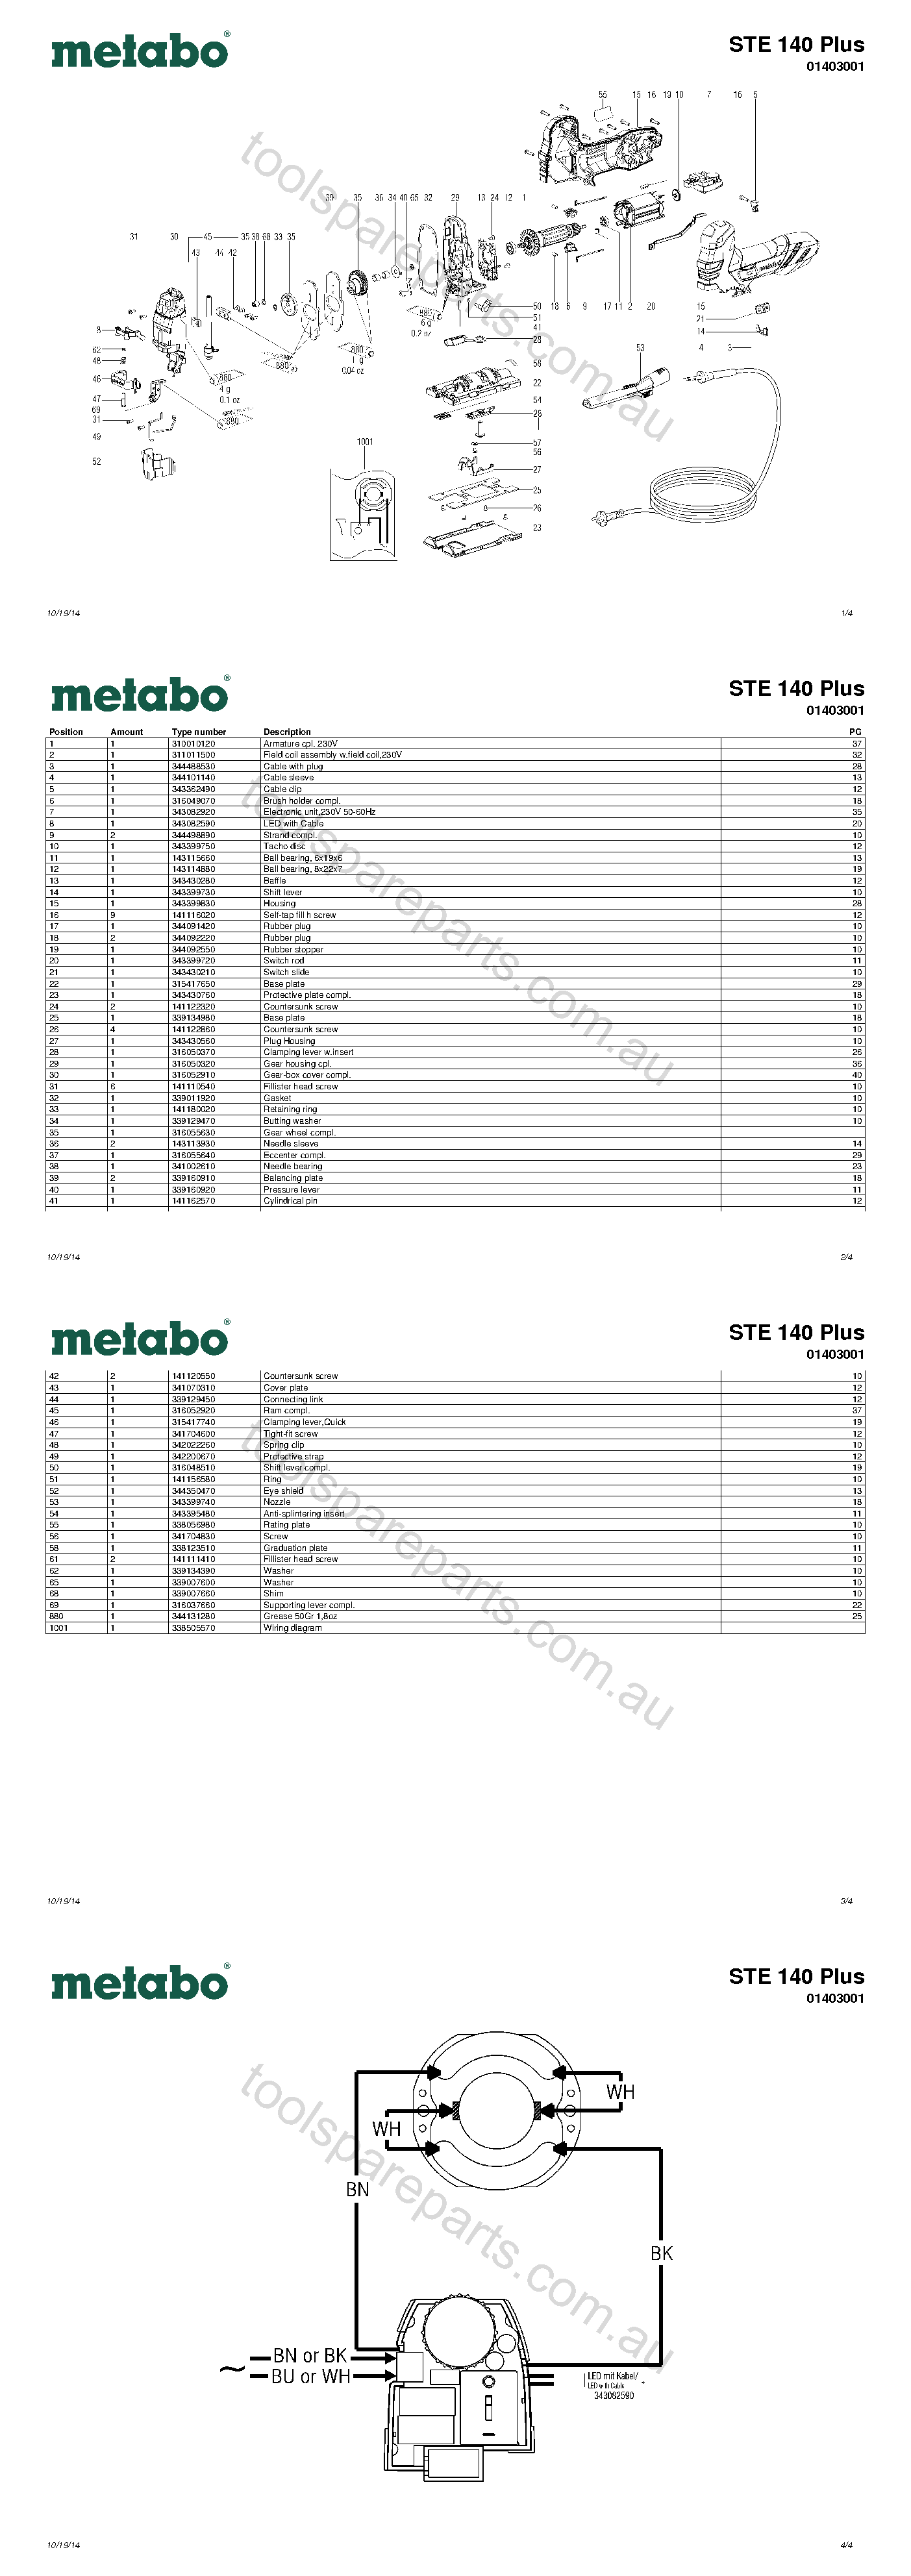 Metabo STE 140 Plus 01403001  Diagram 1